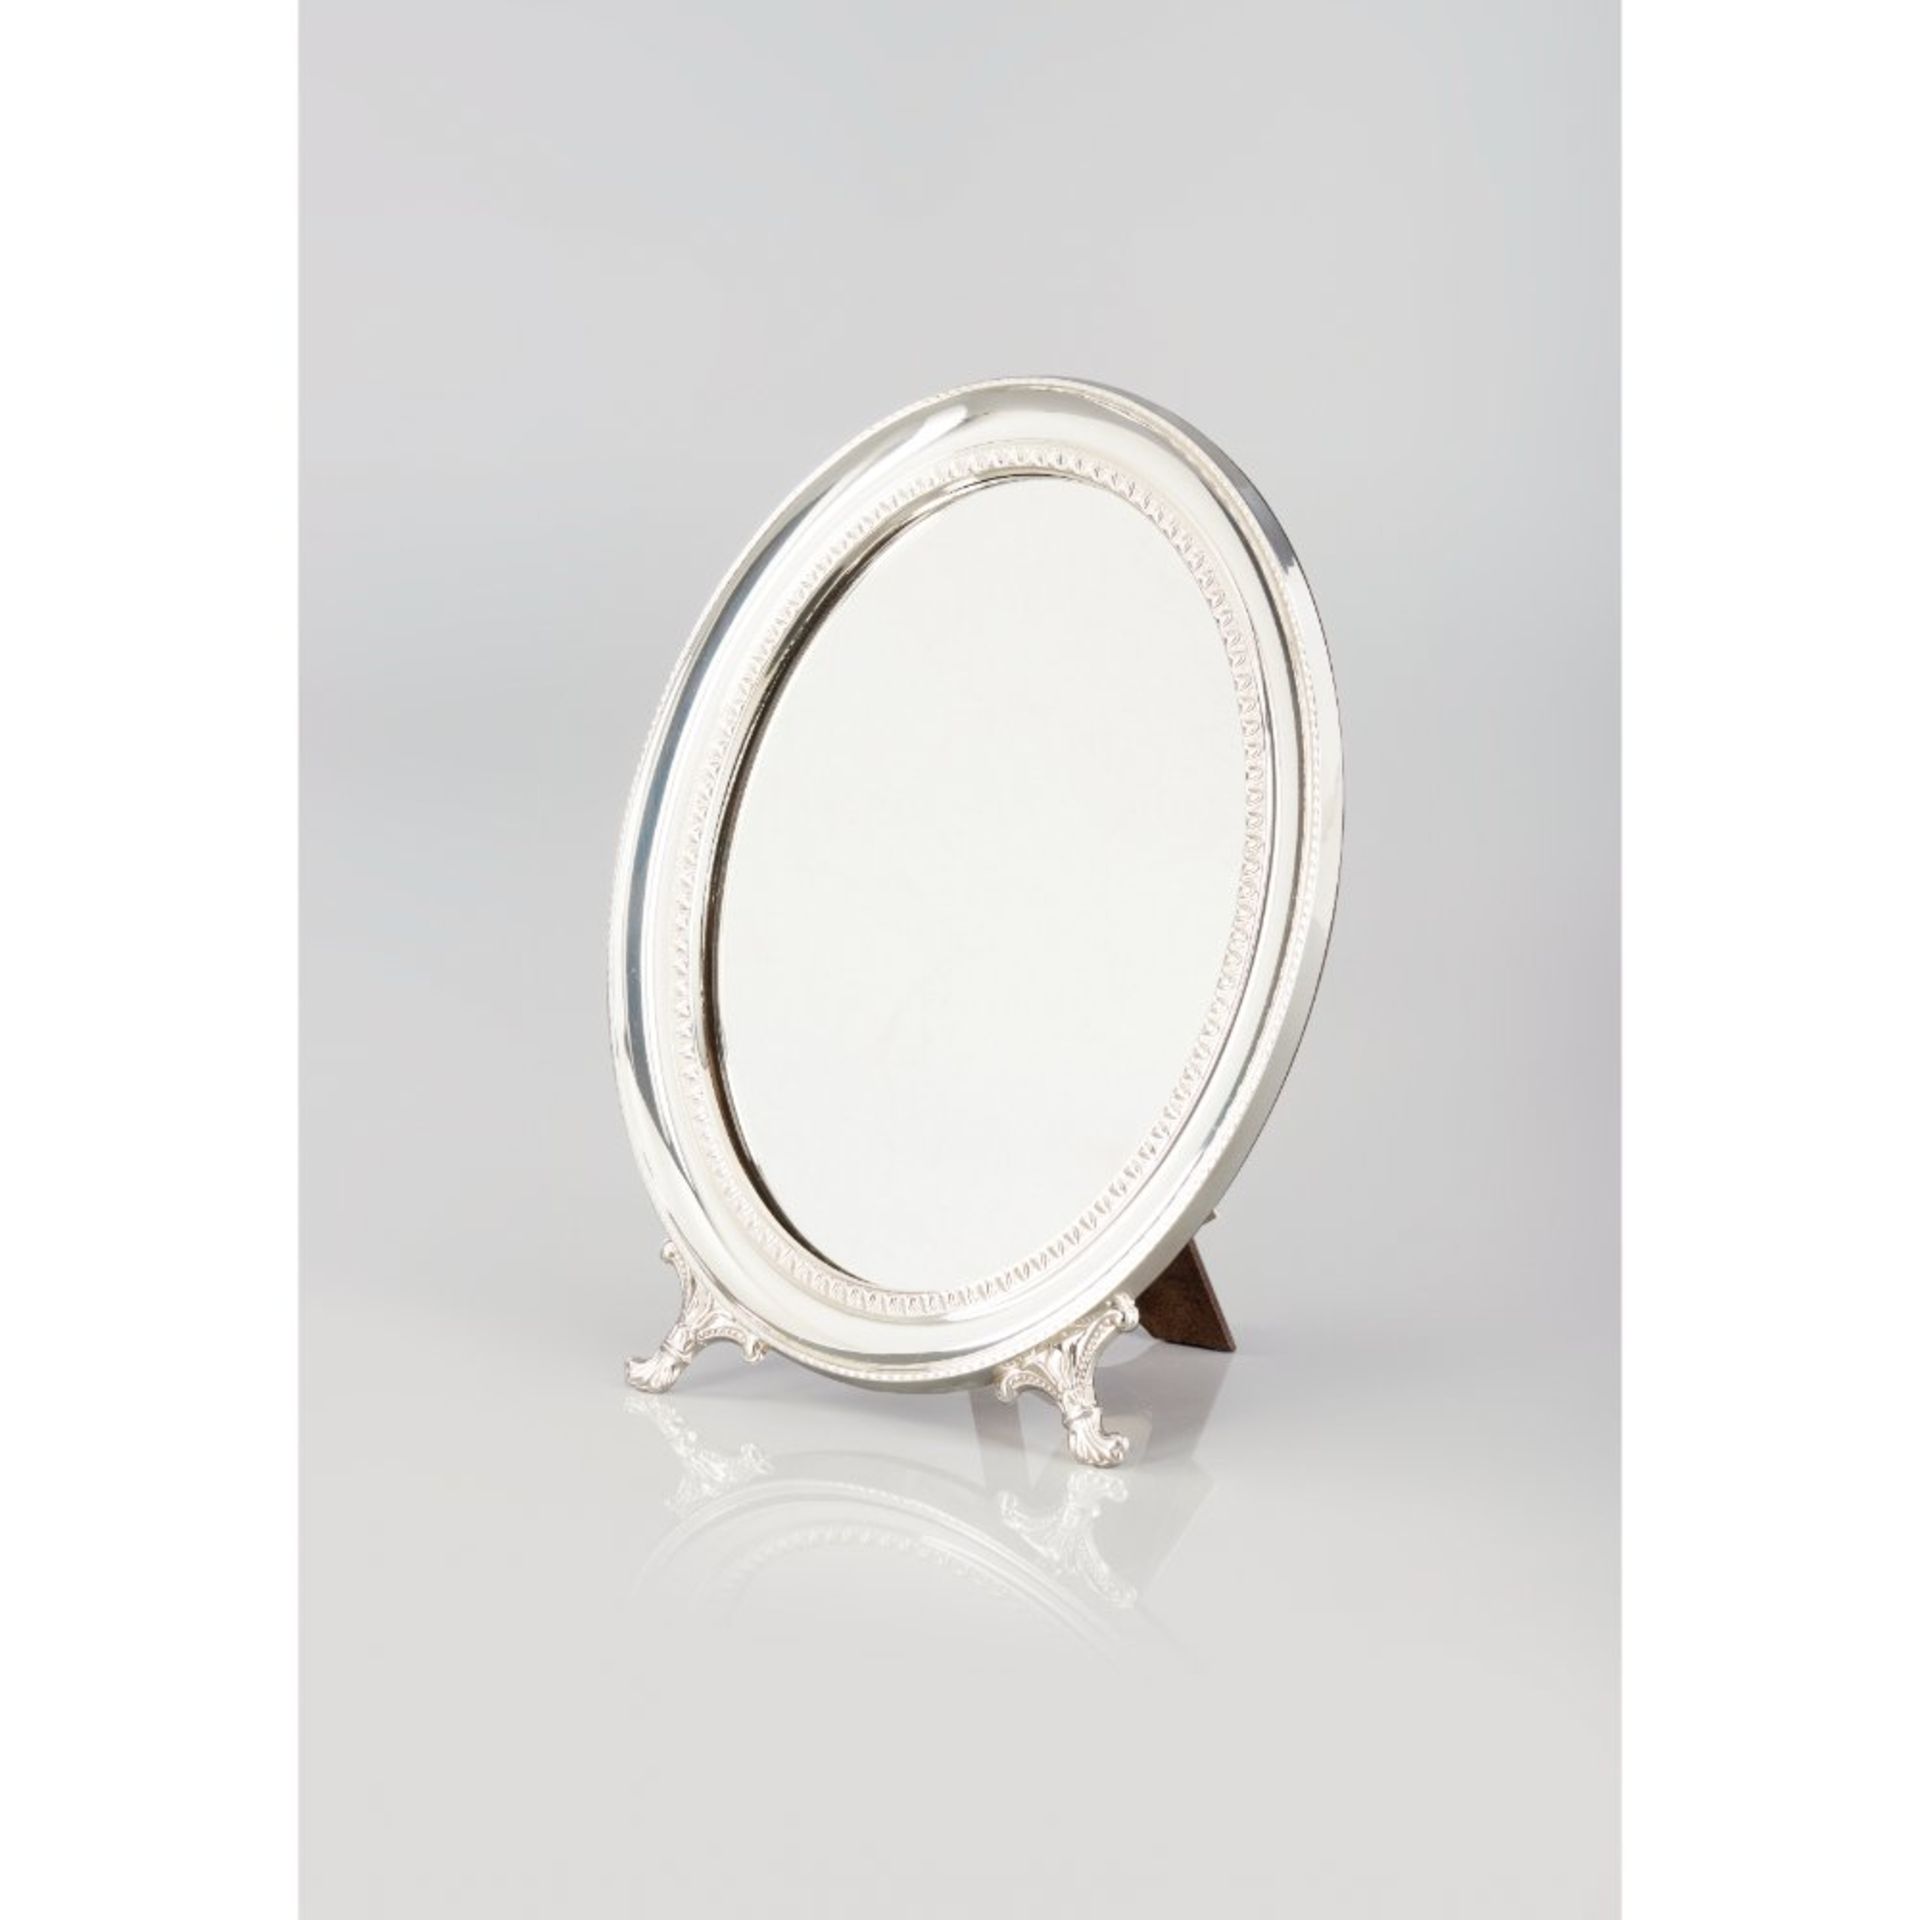 An Oval table mirror